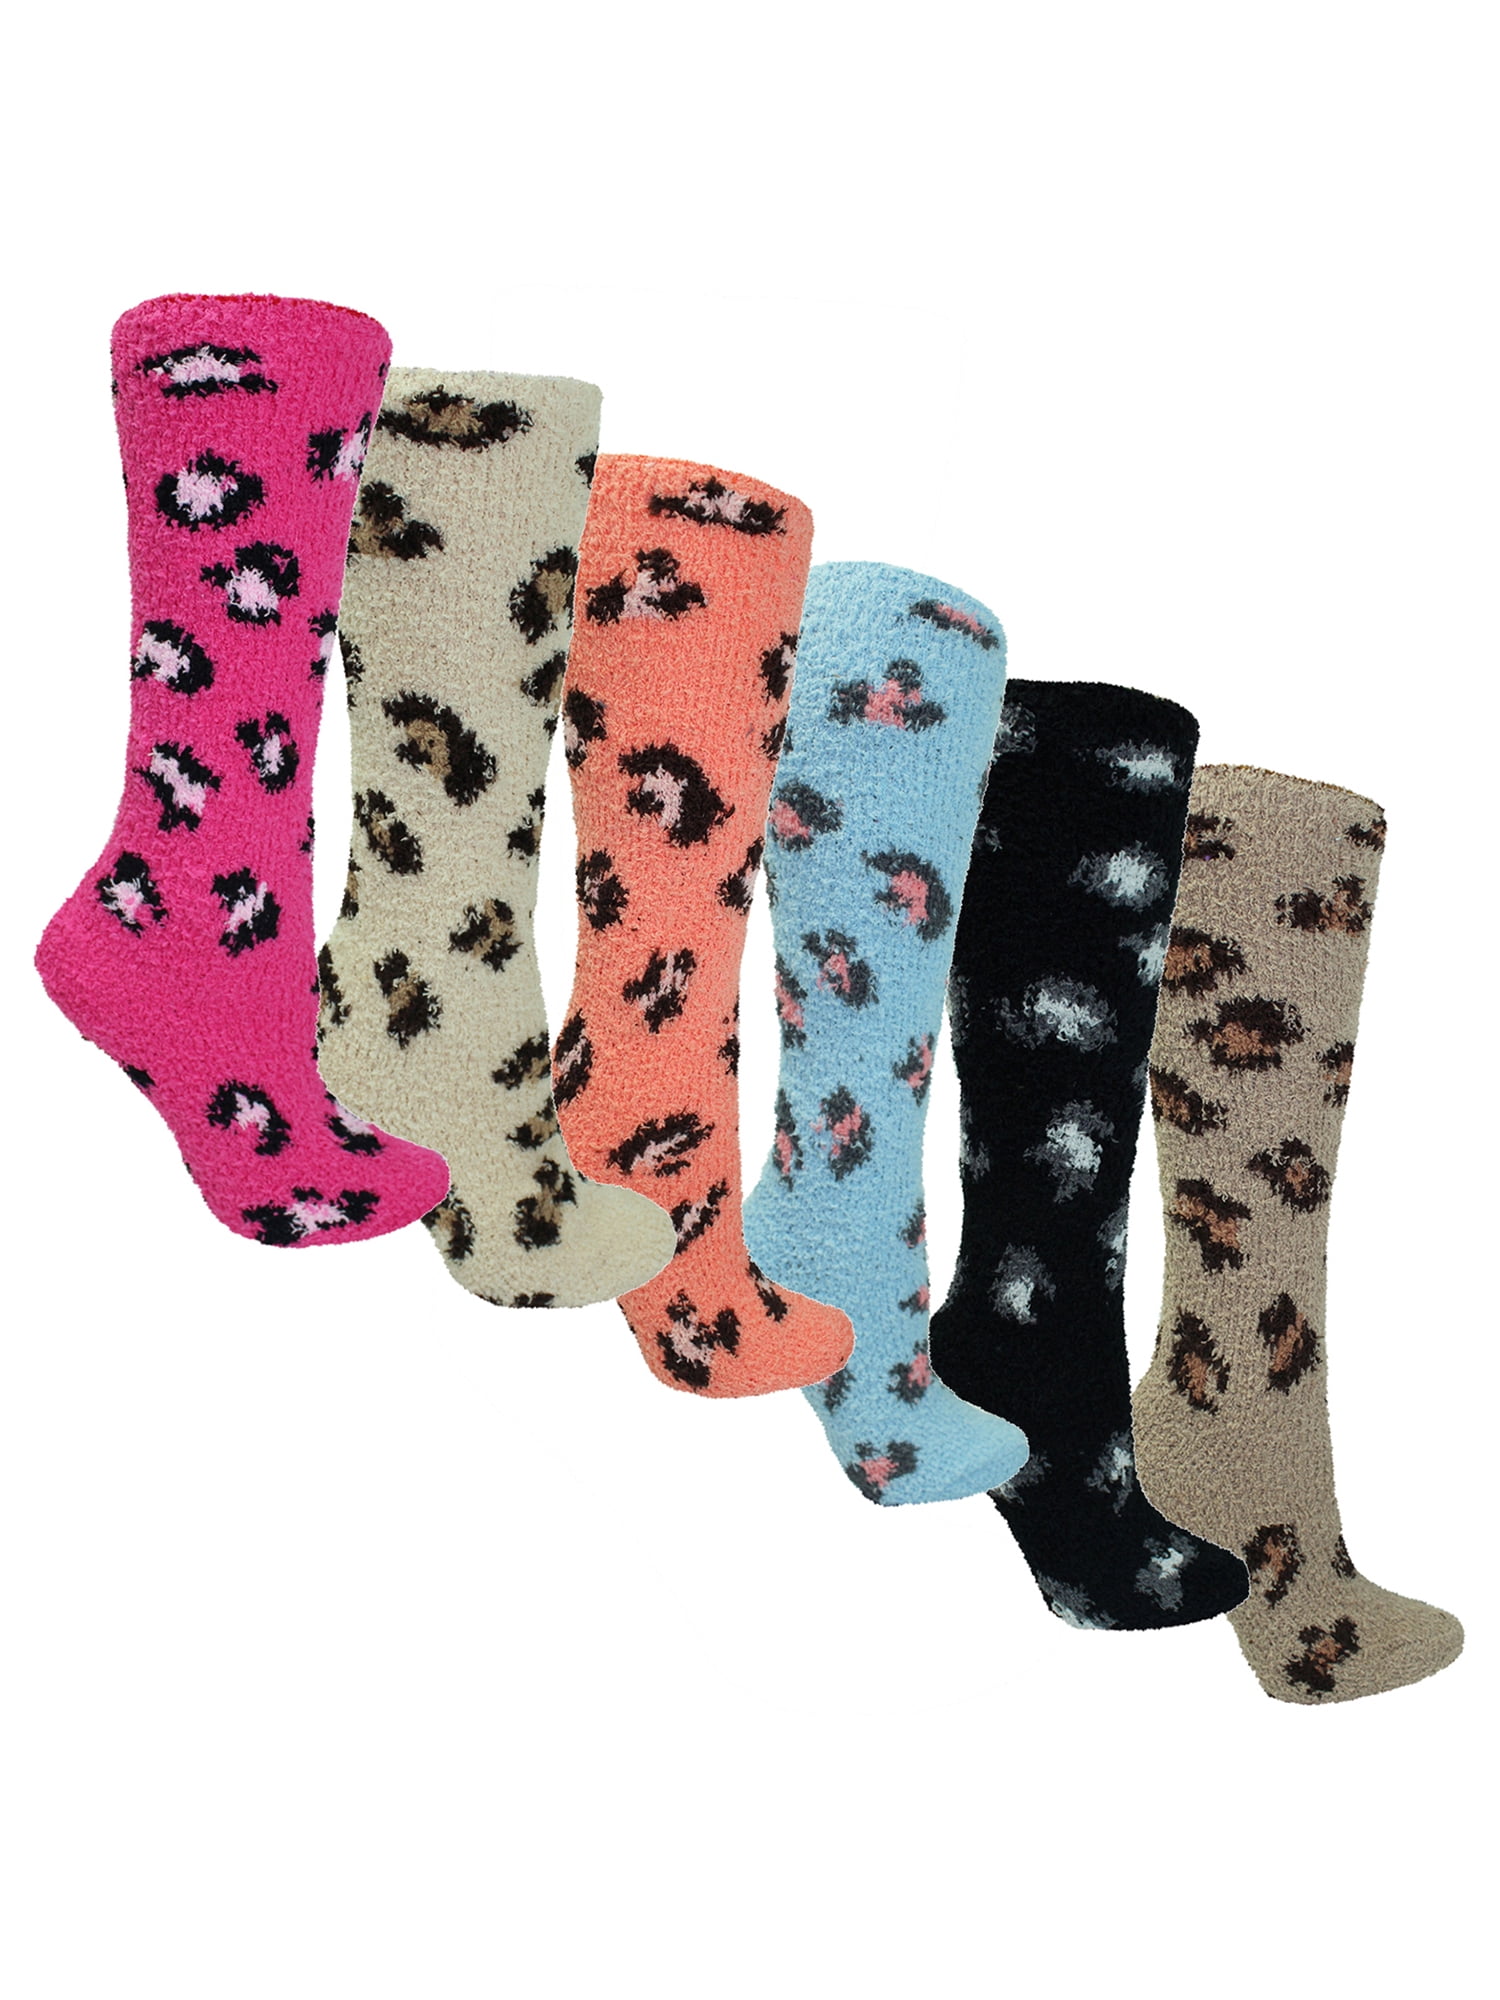 Adult Black and White Leopard Print Socks Personality Crew Tube Socks